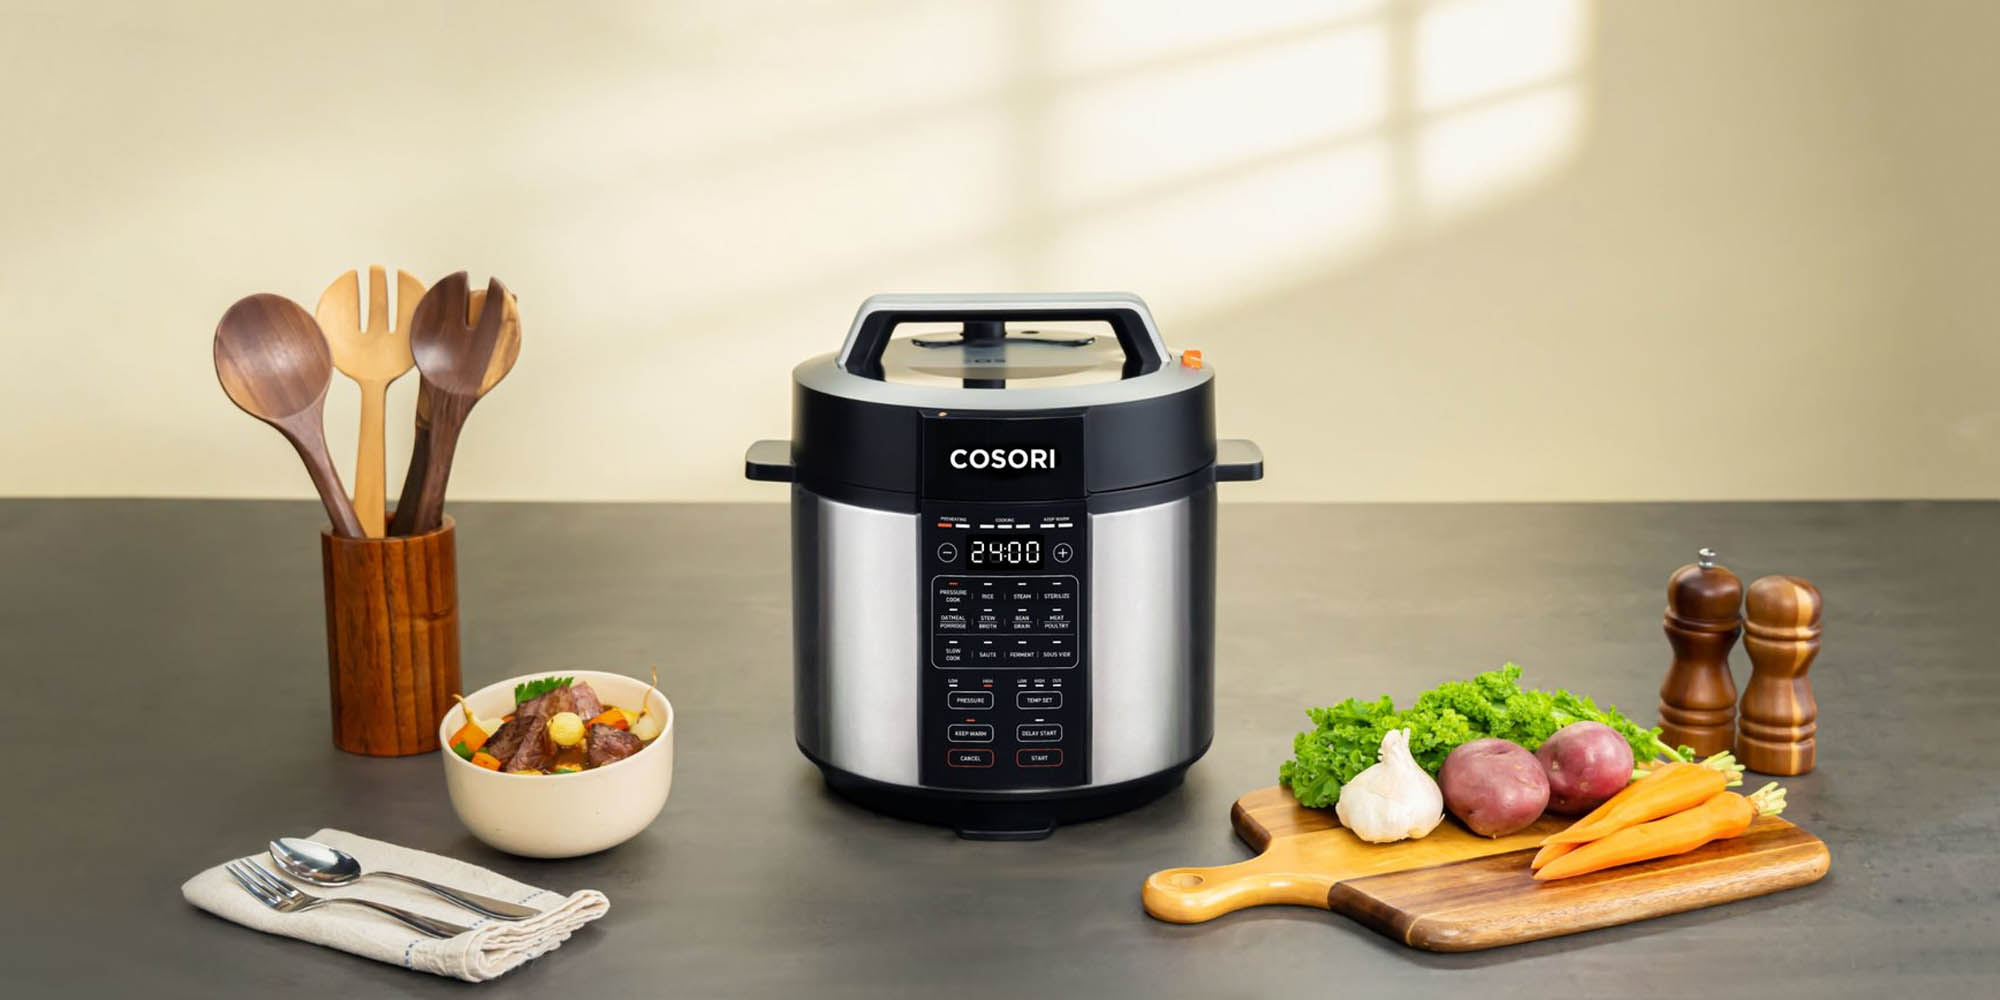 COSORI's latest 6-quart pressure cooker has 13 cooking modes